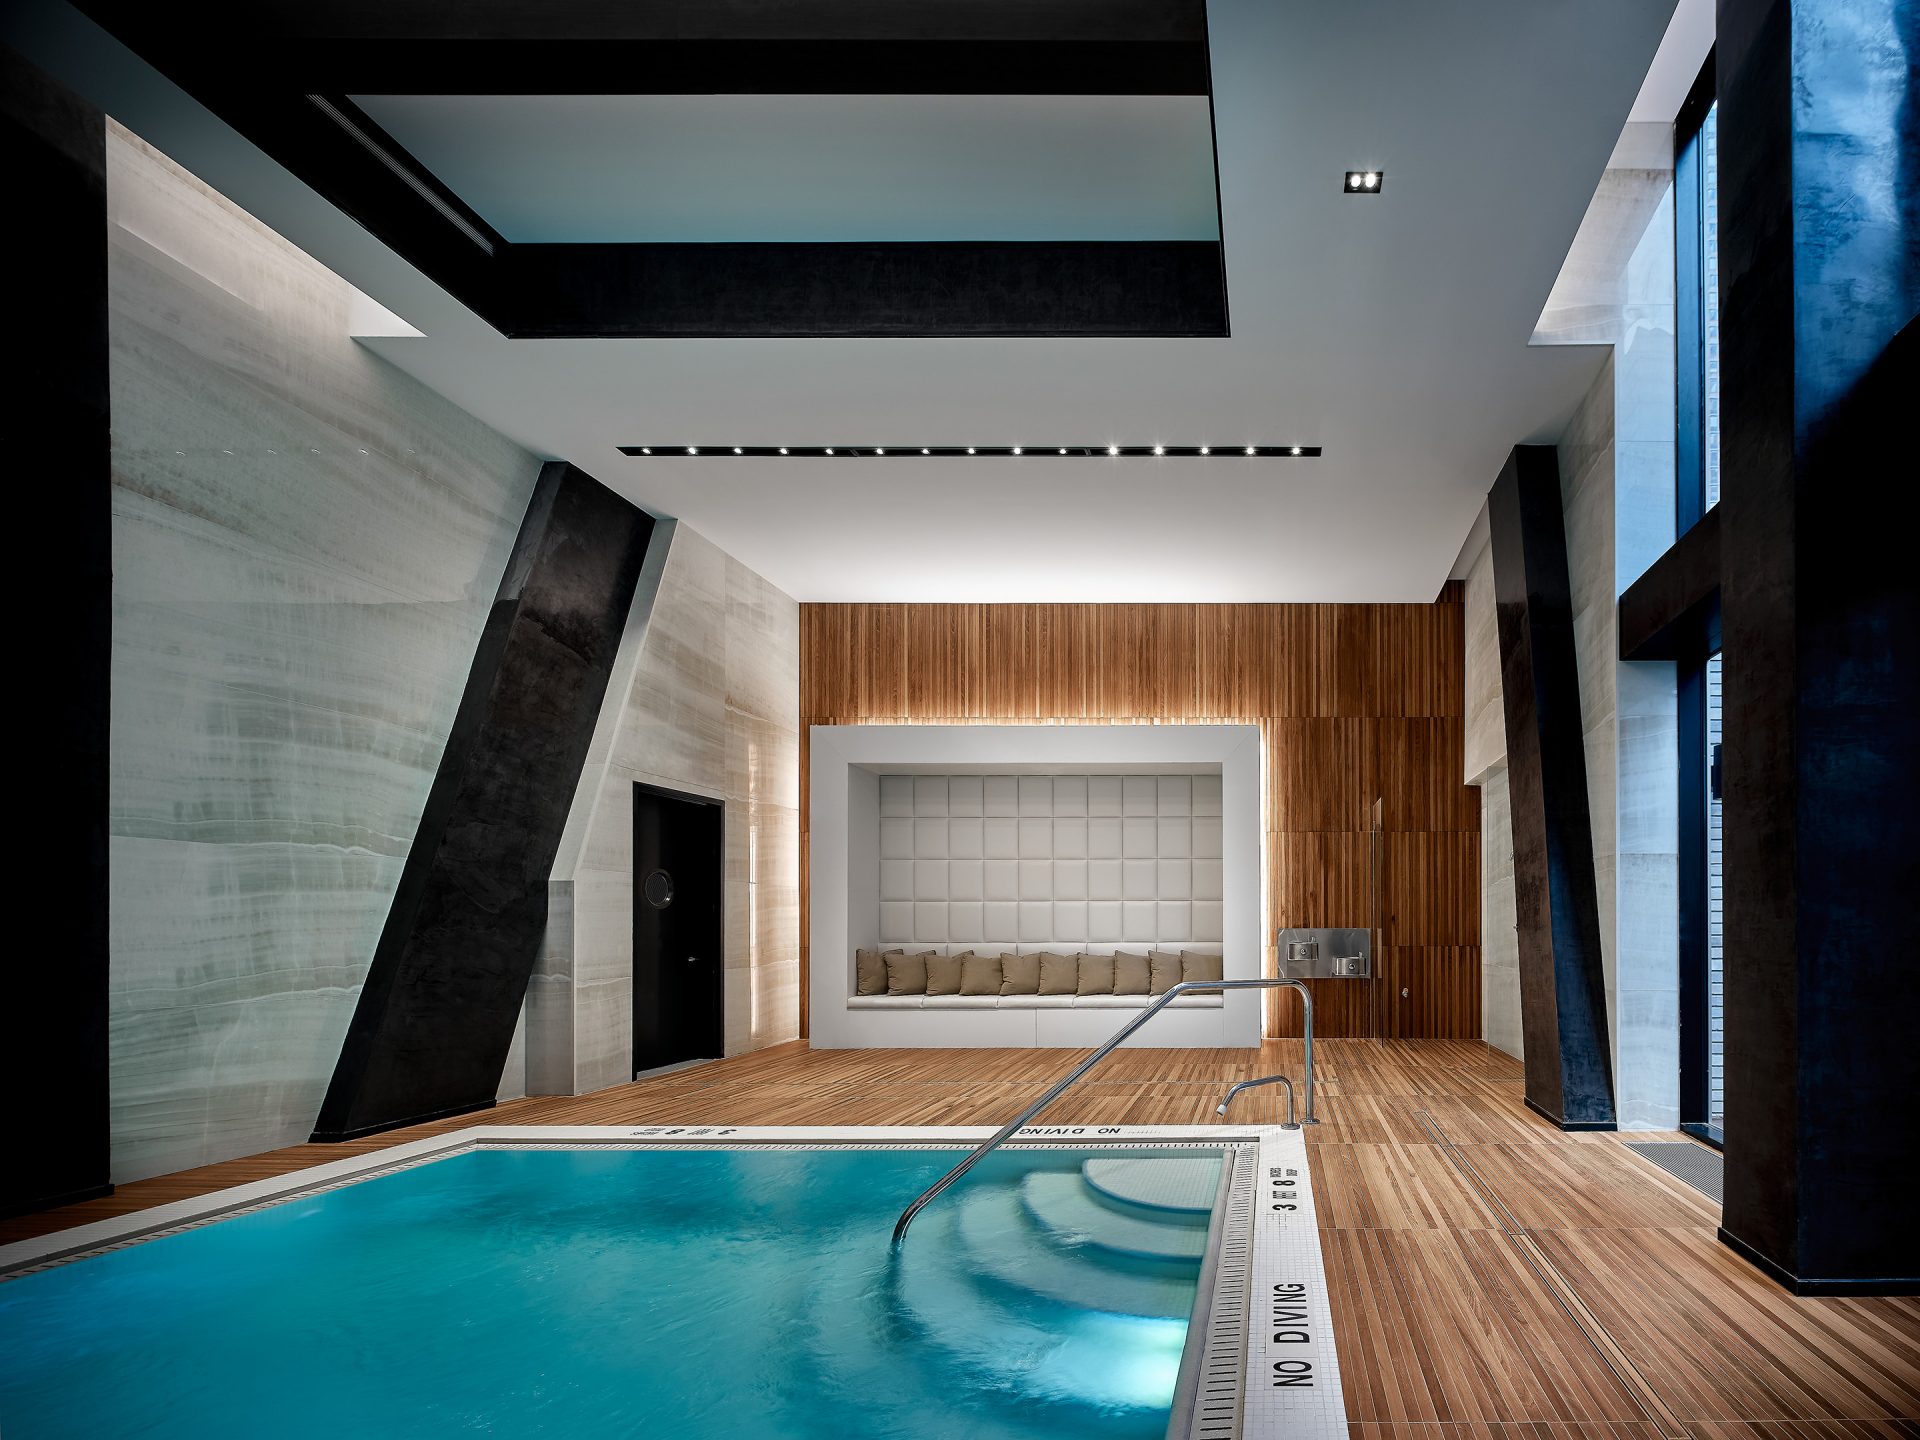 Charlie-West-condos-NewYork-Lemay+Escobar-interior-swimming-pool